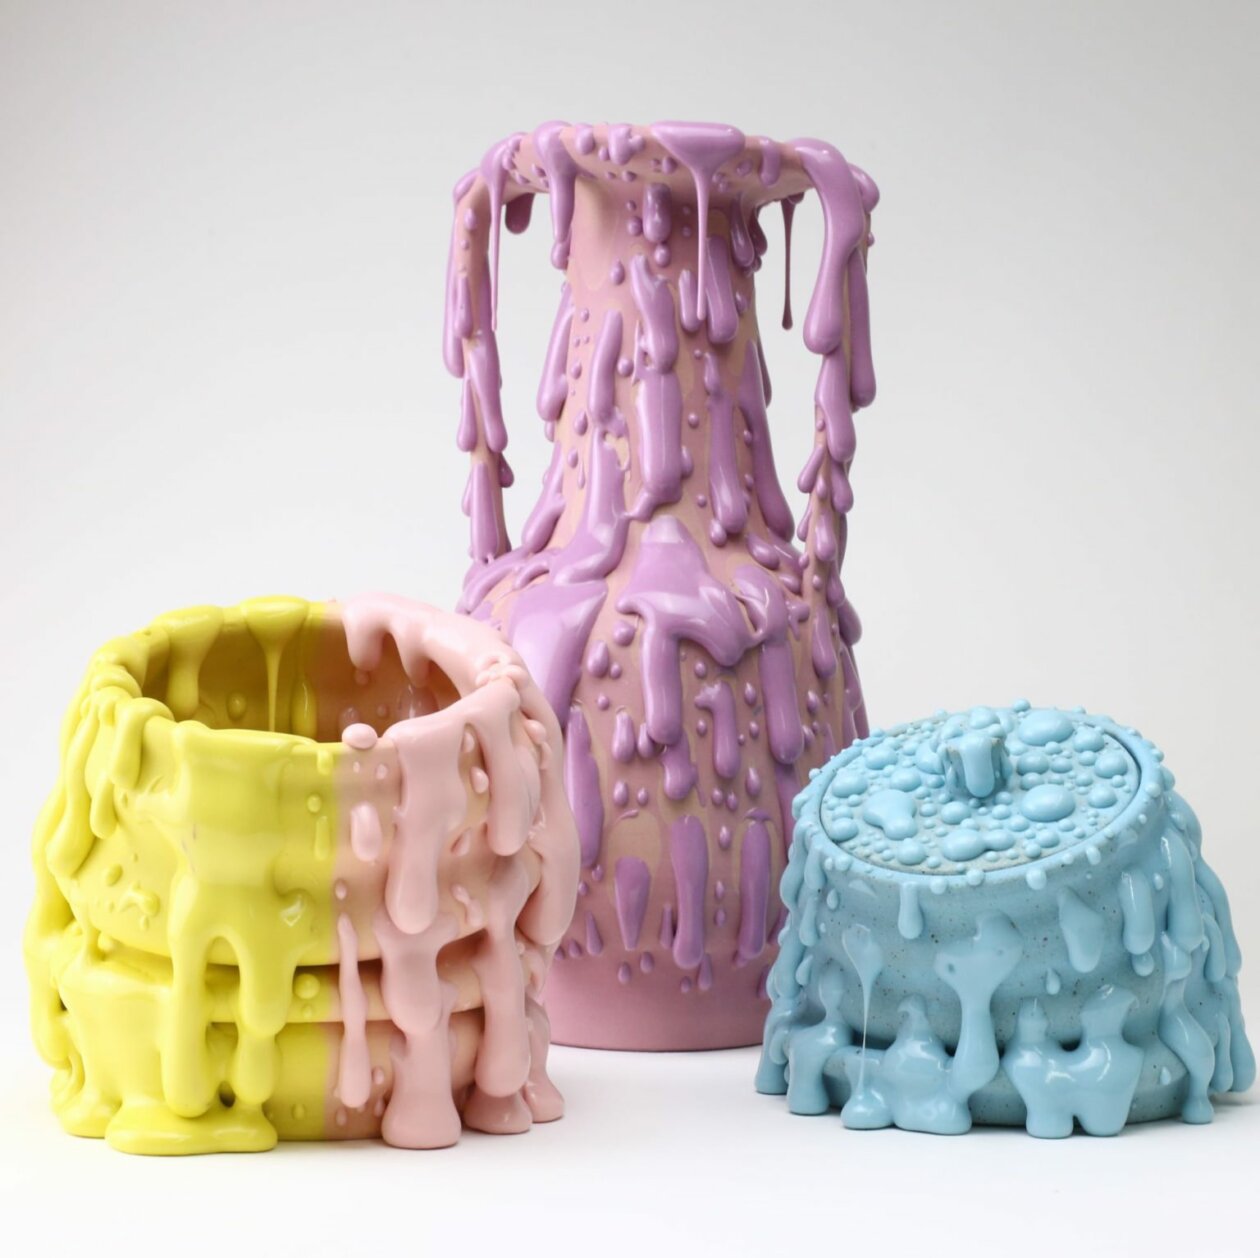 Playful Ceramic Vessels Of Strange Creatures And Melted Shapes By Philip Kupferschmidt 14